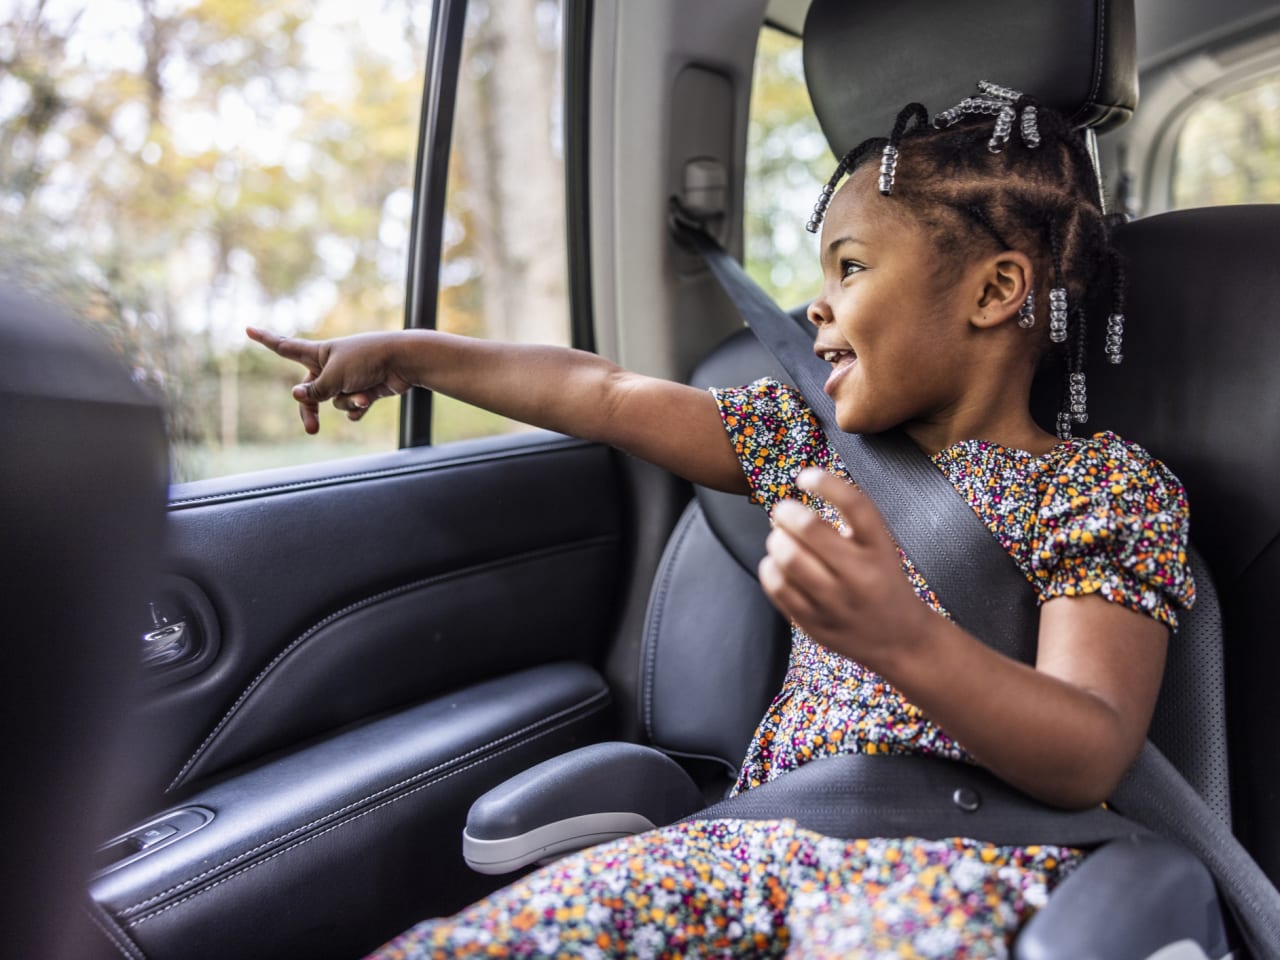 Junges Mädchen schaut aus dem Fenster auf dem Rücksitz eines Autos. © MoMo Productions/DigitalVision via Getty Images